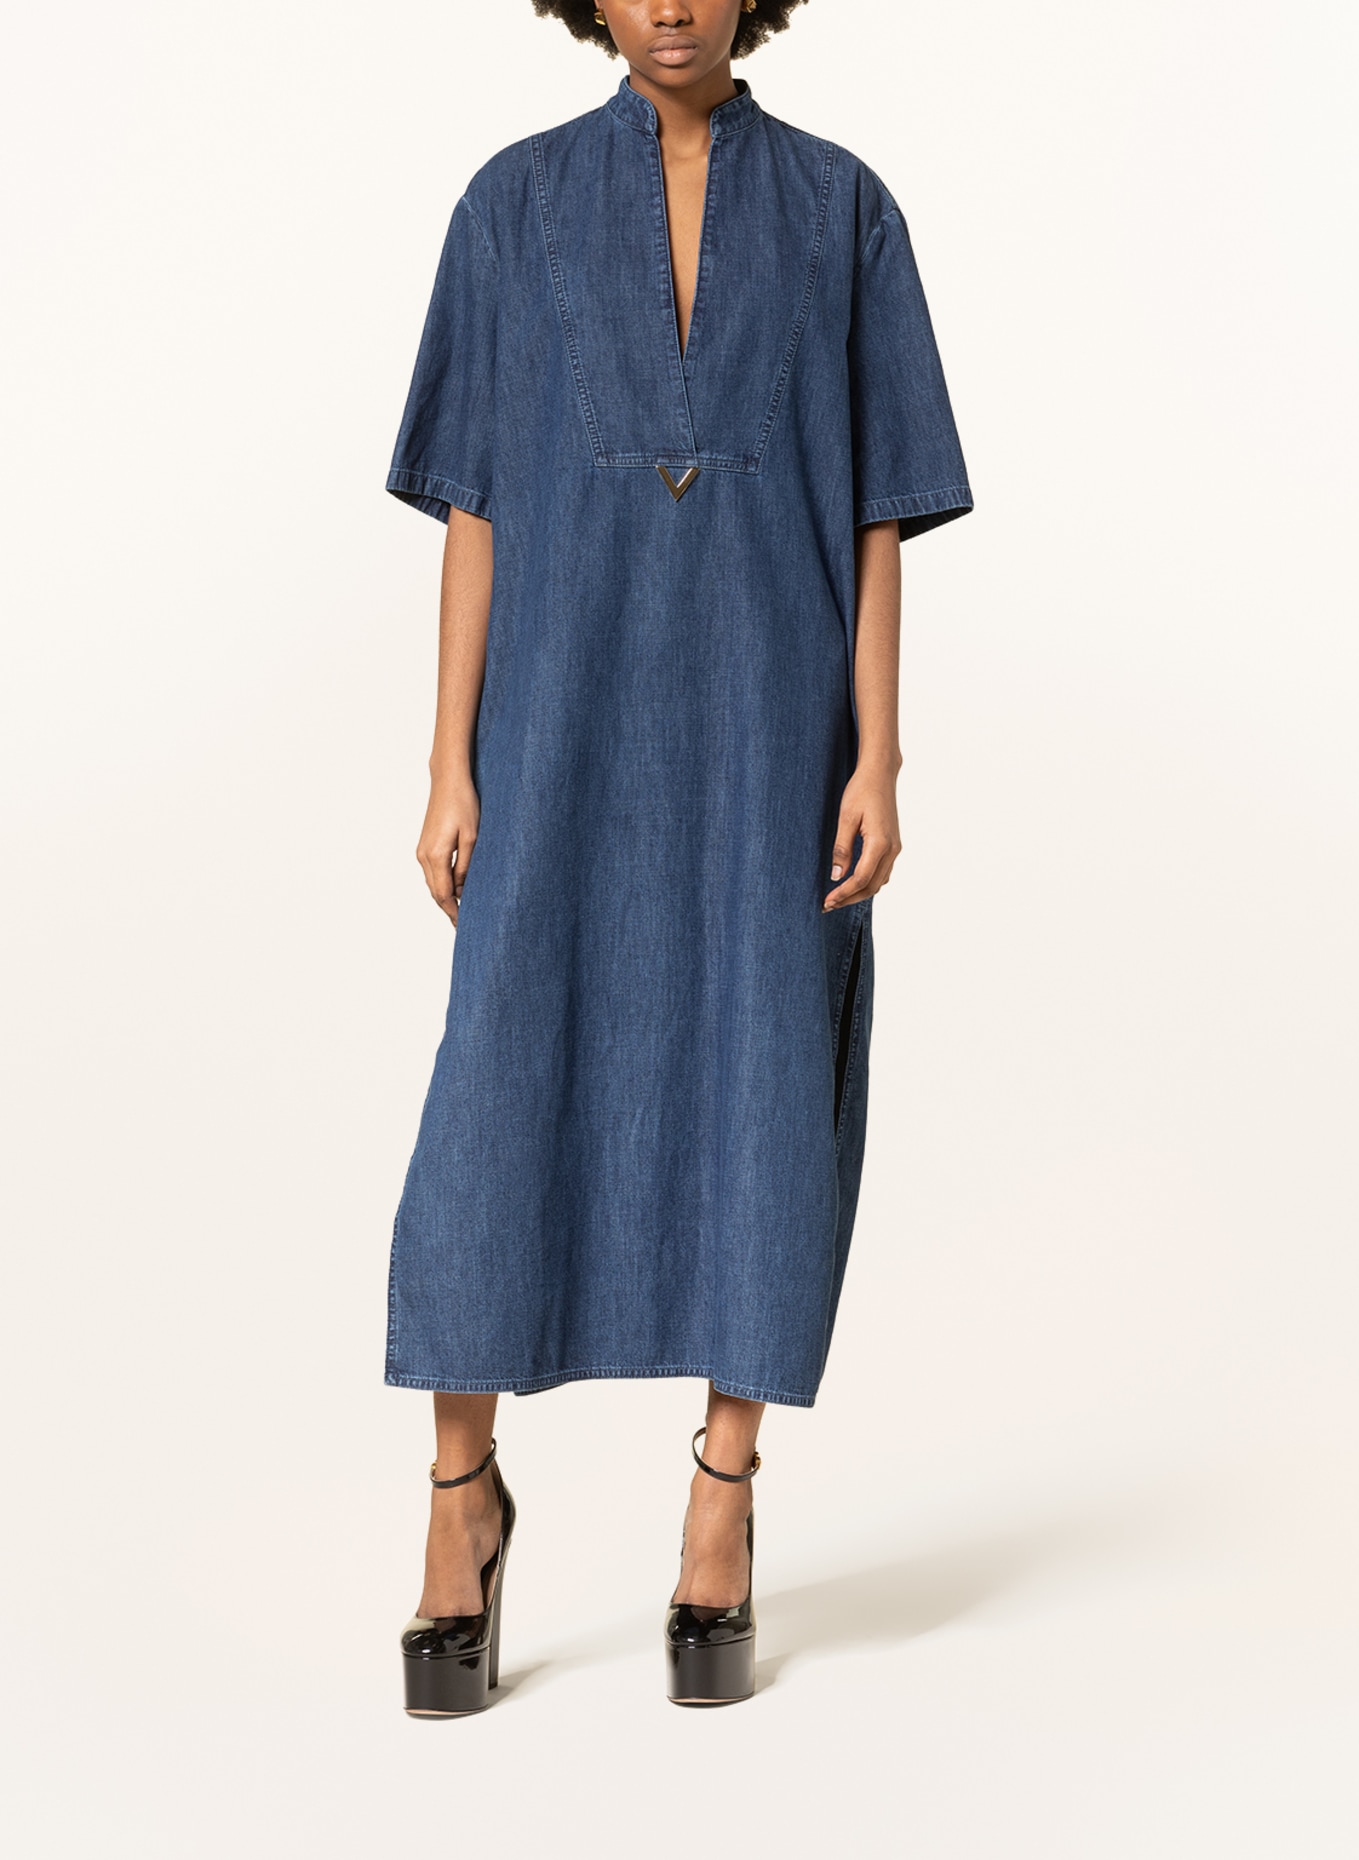 VALENTINO Kleid in Jeansoptik, Farbe: 558 MEDIUM BLUE DENIM (Bild 2)